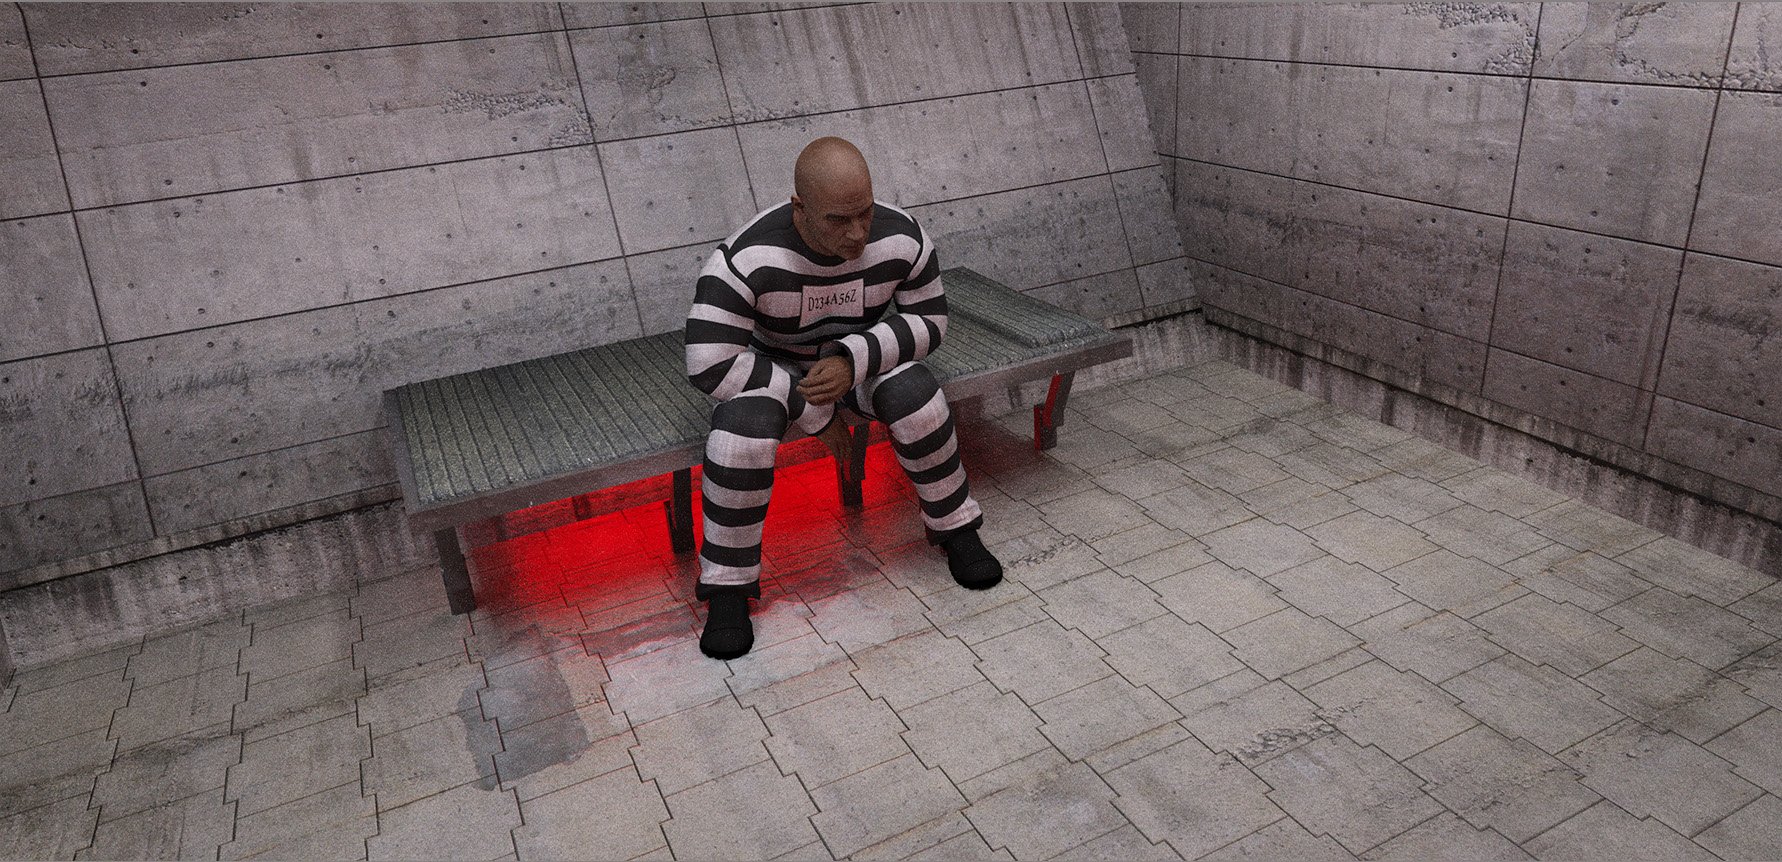 Sci-fi Prison Cell by: , 3D Models by Daz 3D